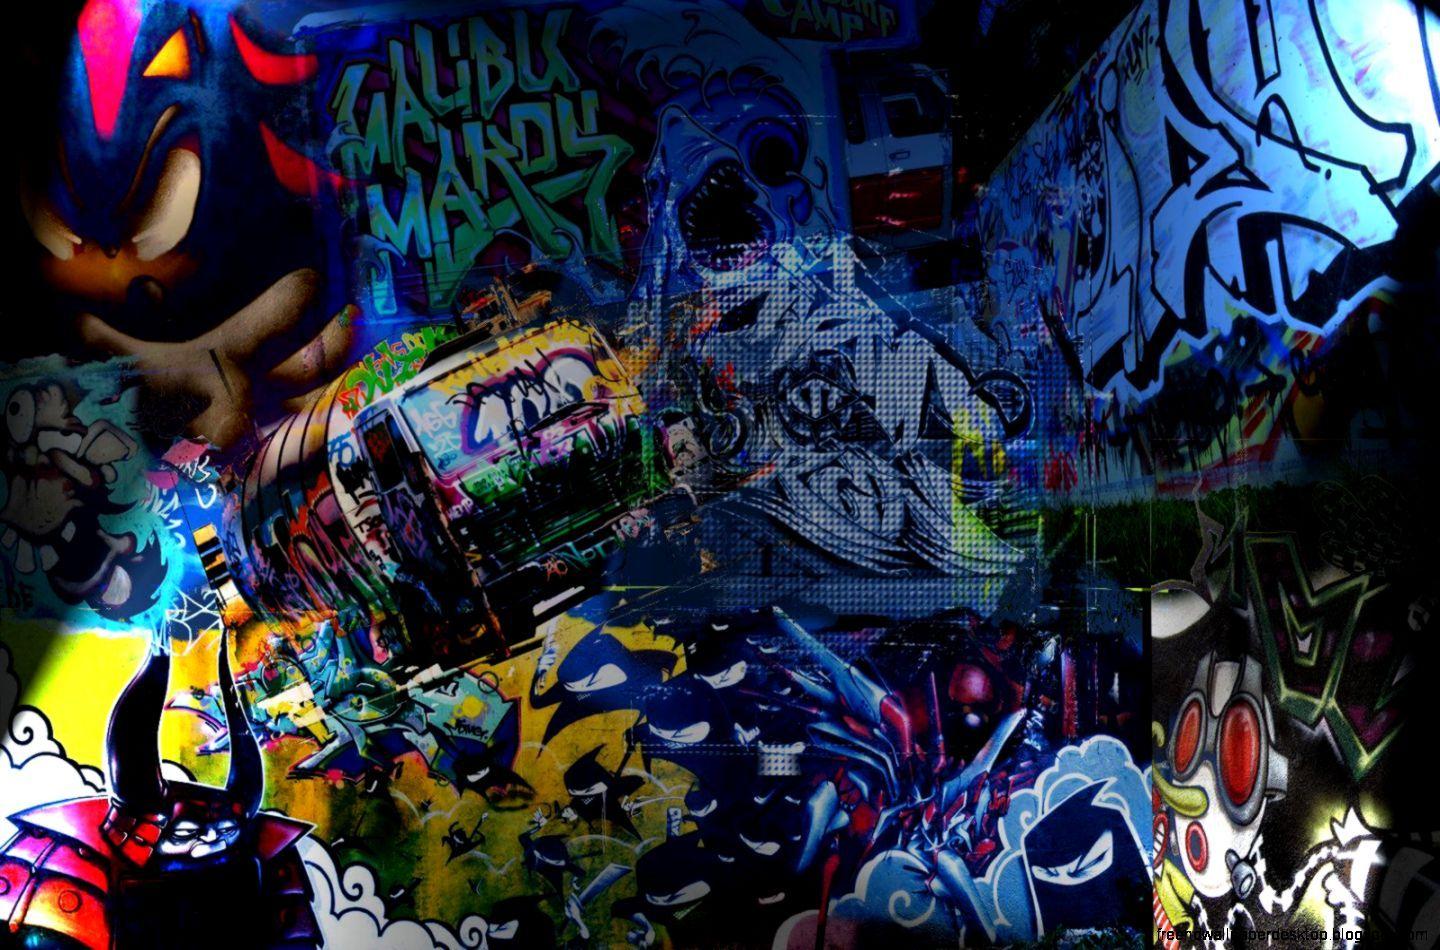 Dark Graffiti Wallpapers - Top Free Dark Graffiti Backgrounds ...